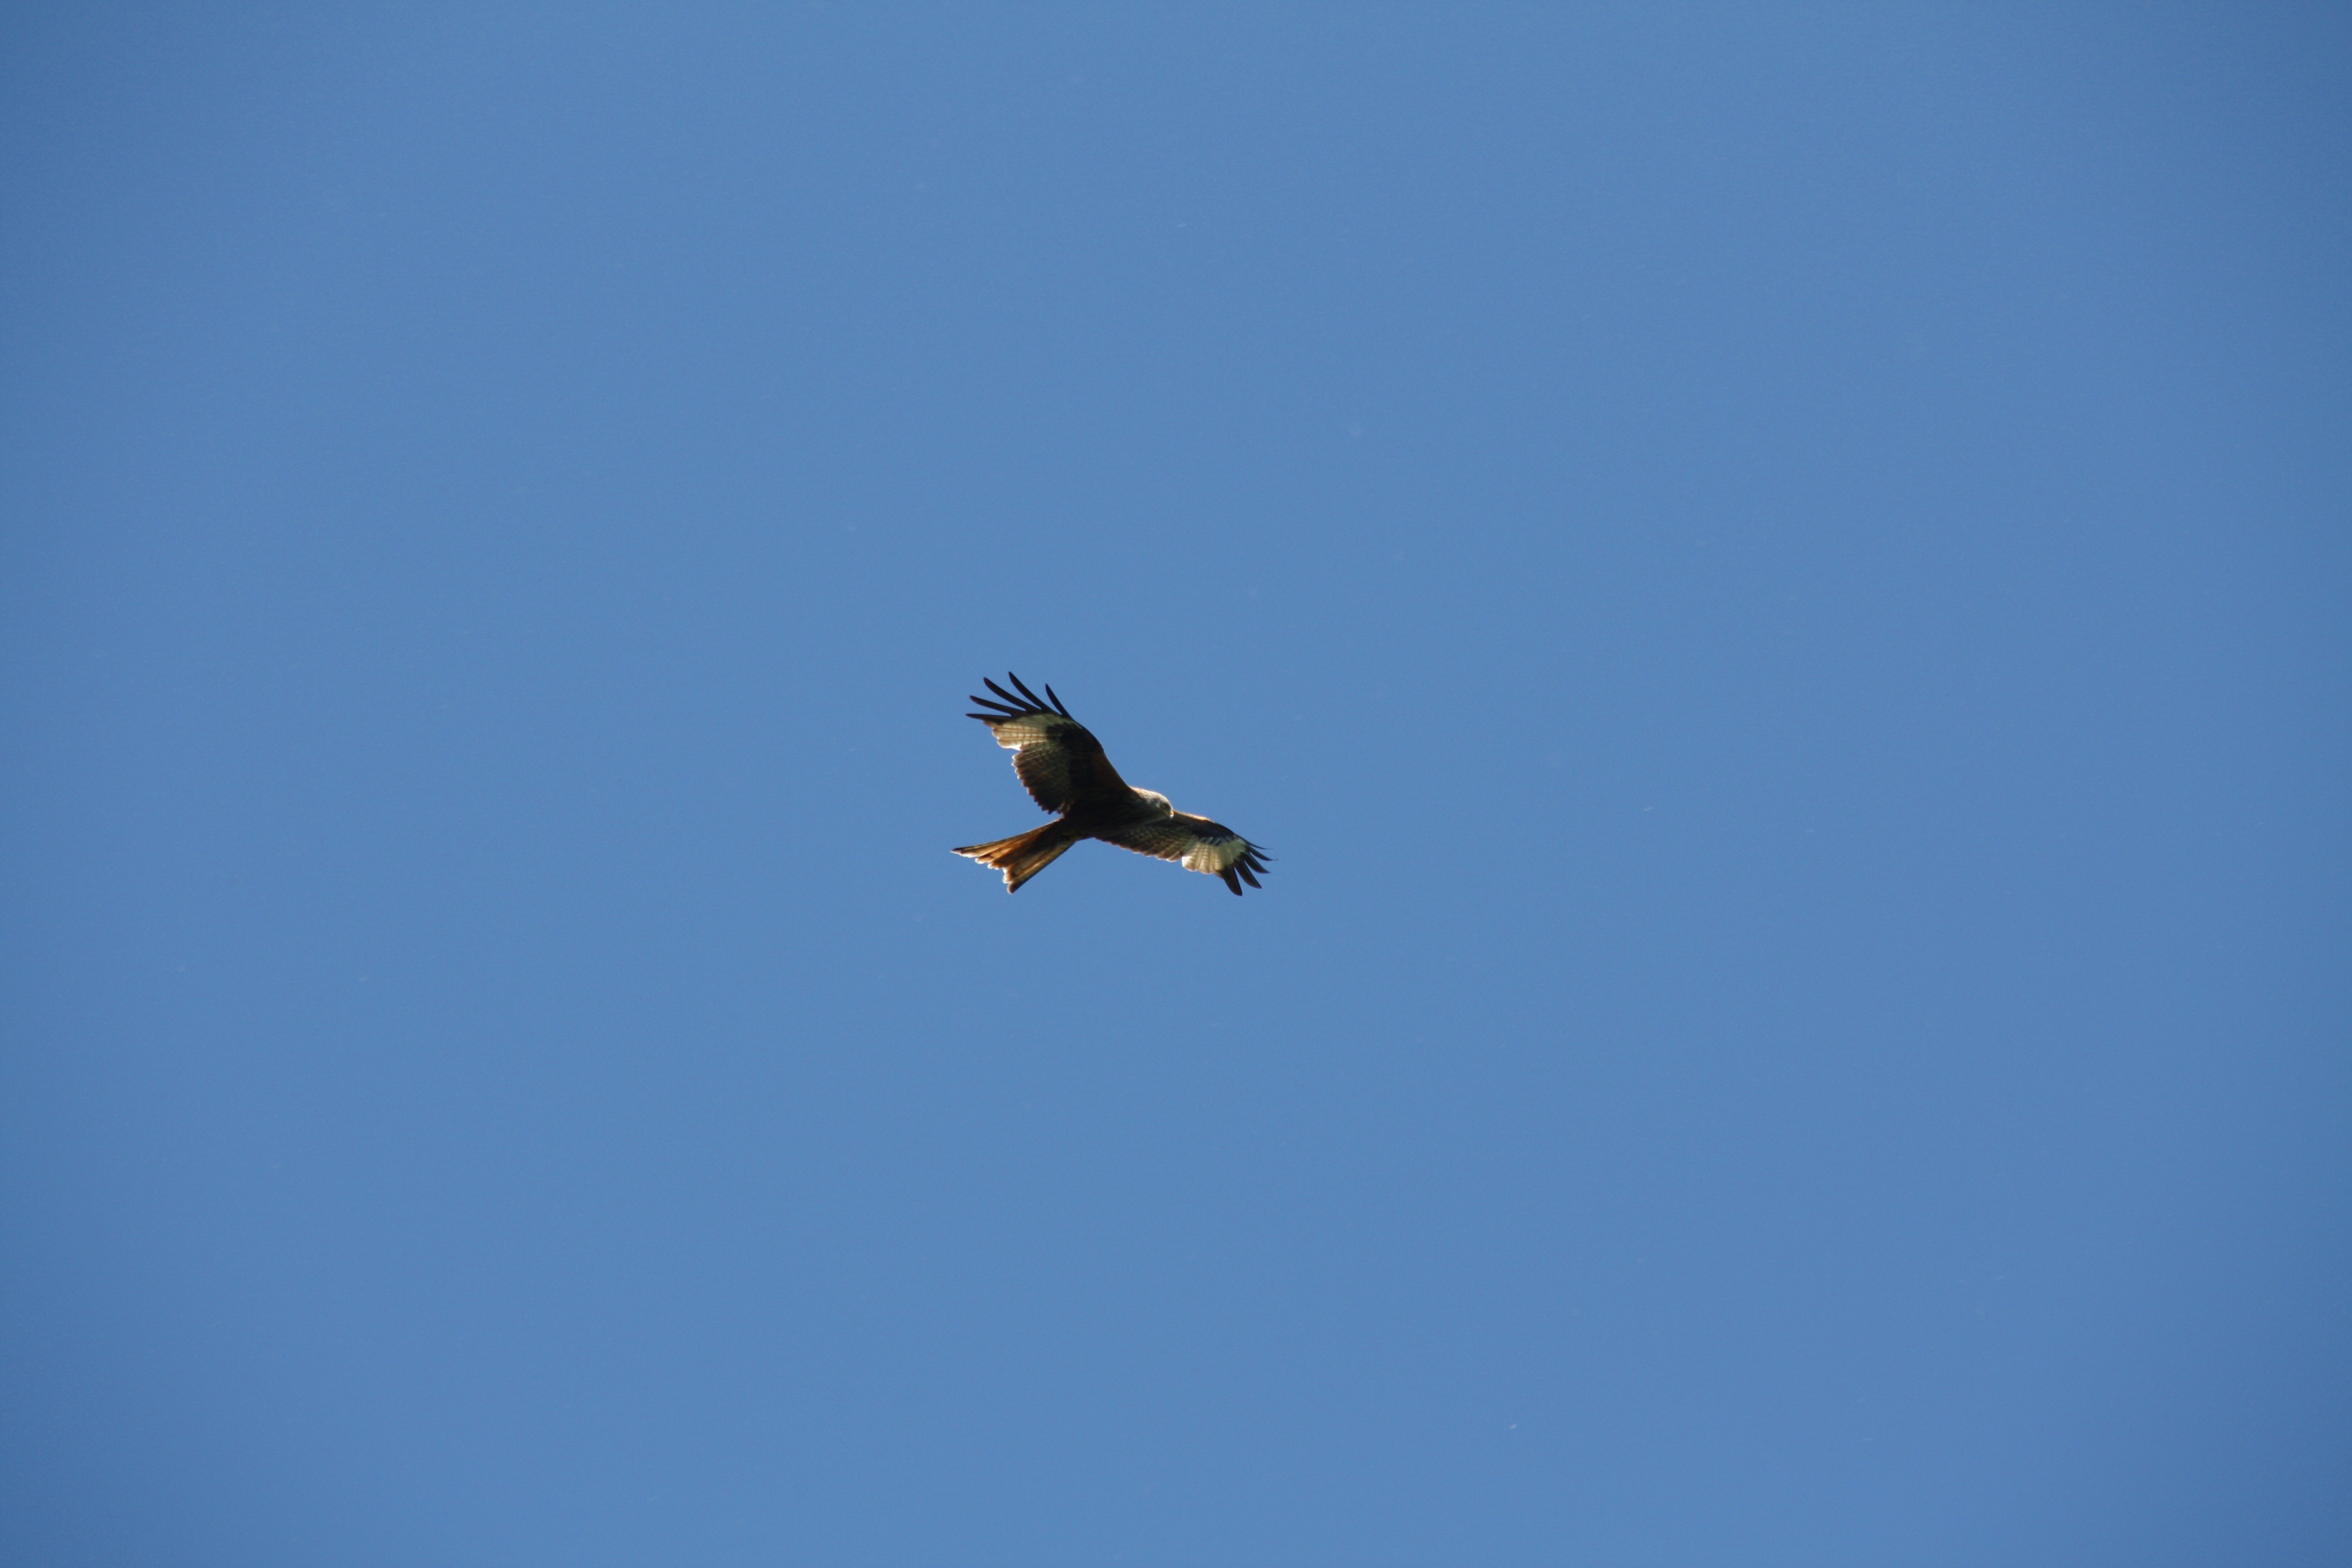 A soaring bird.